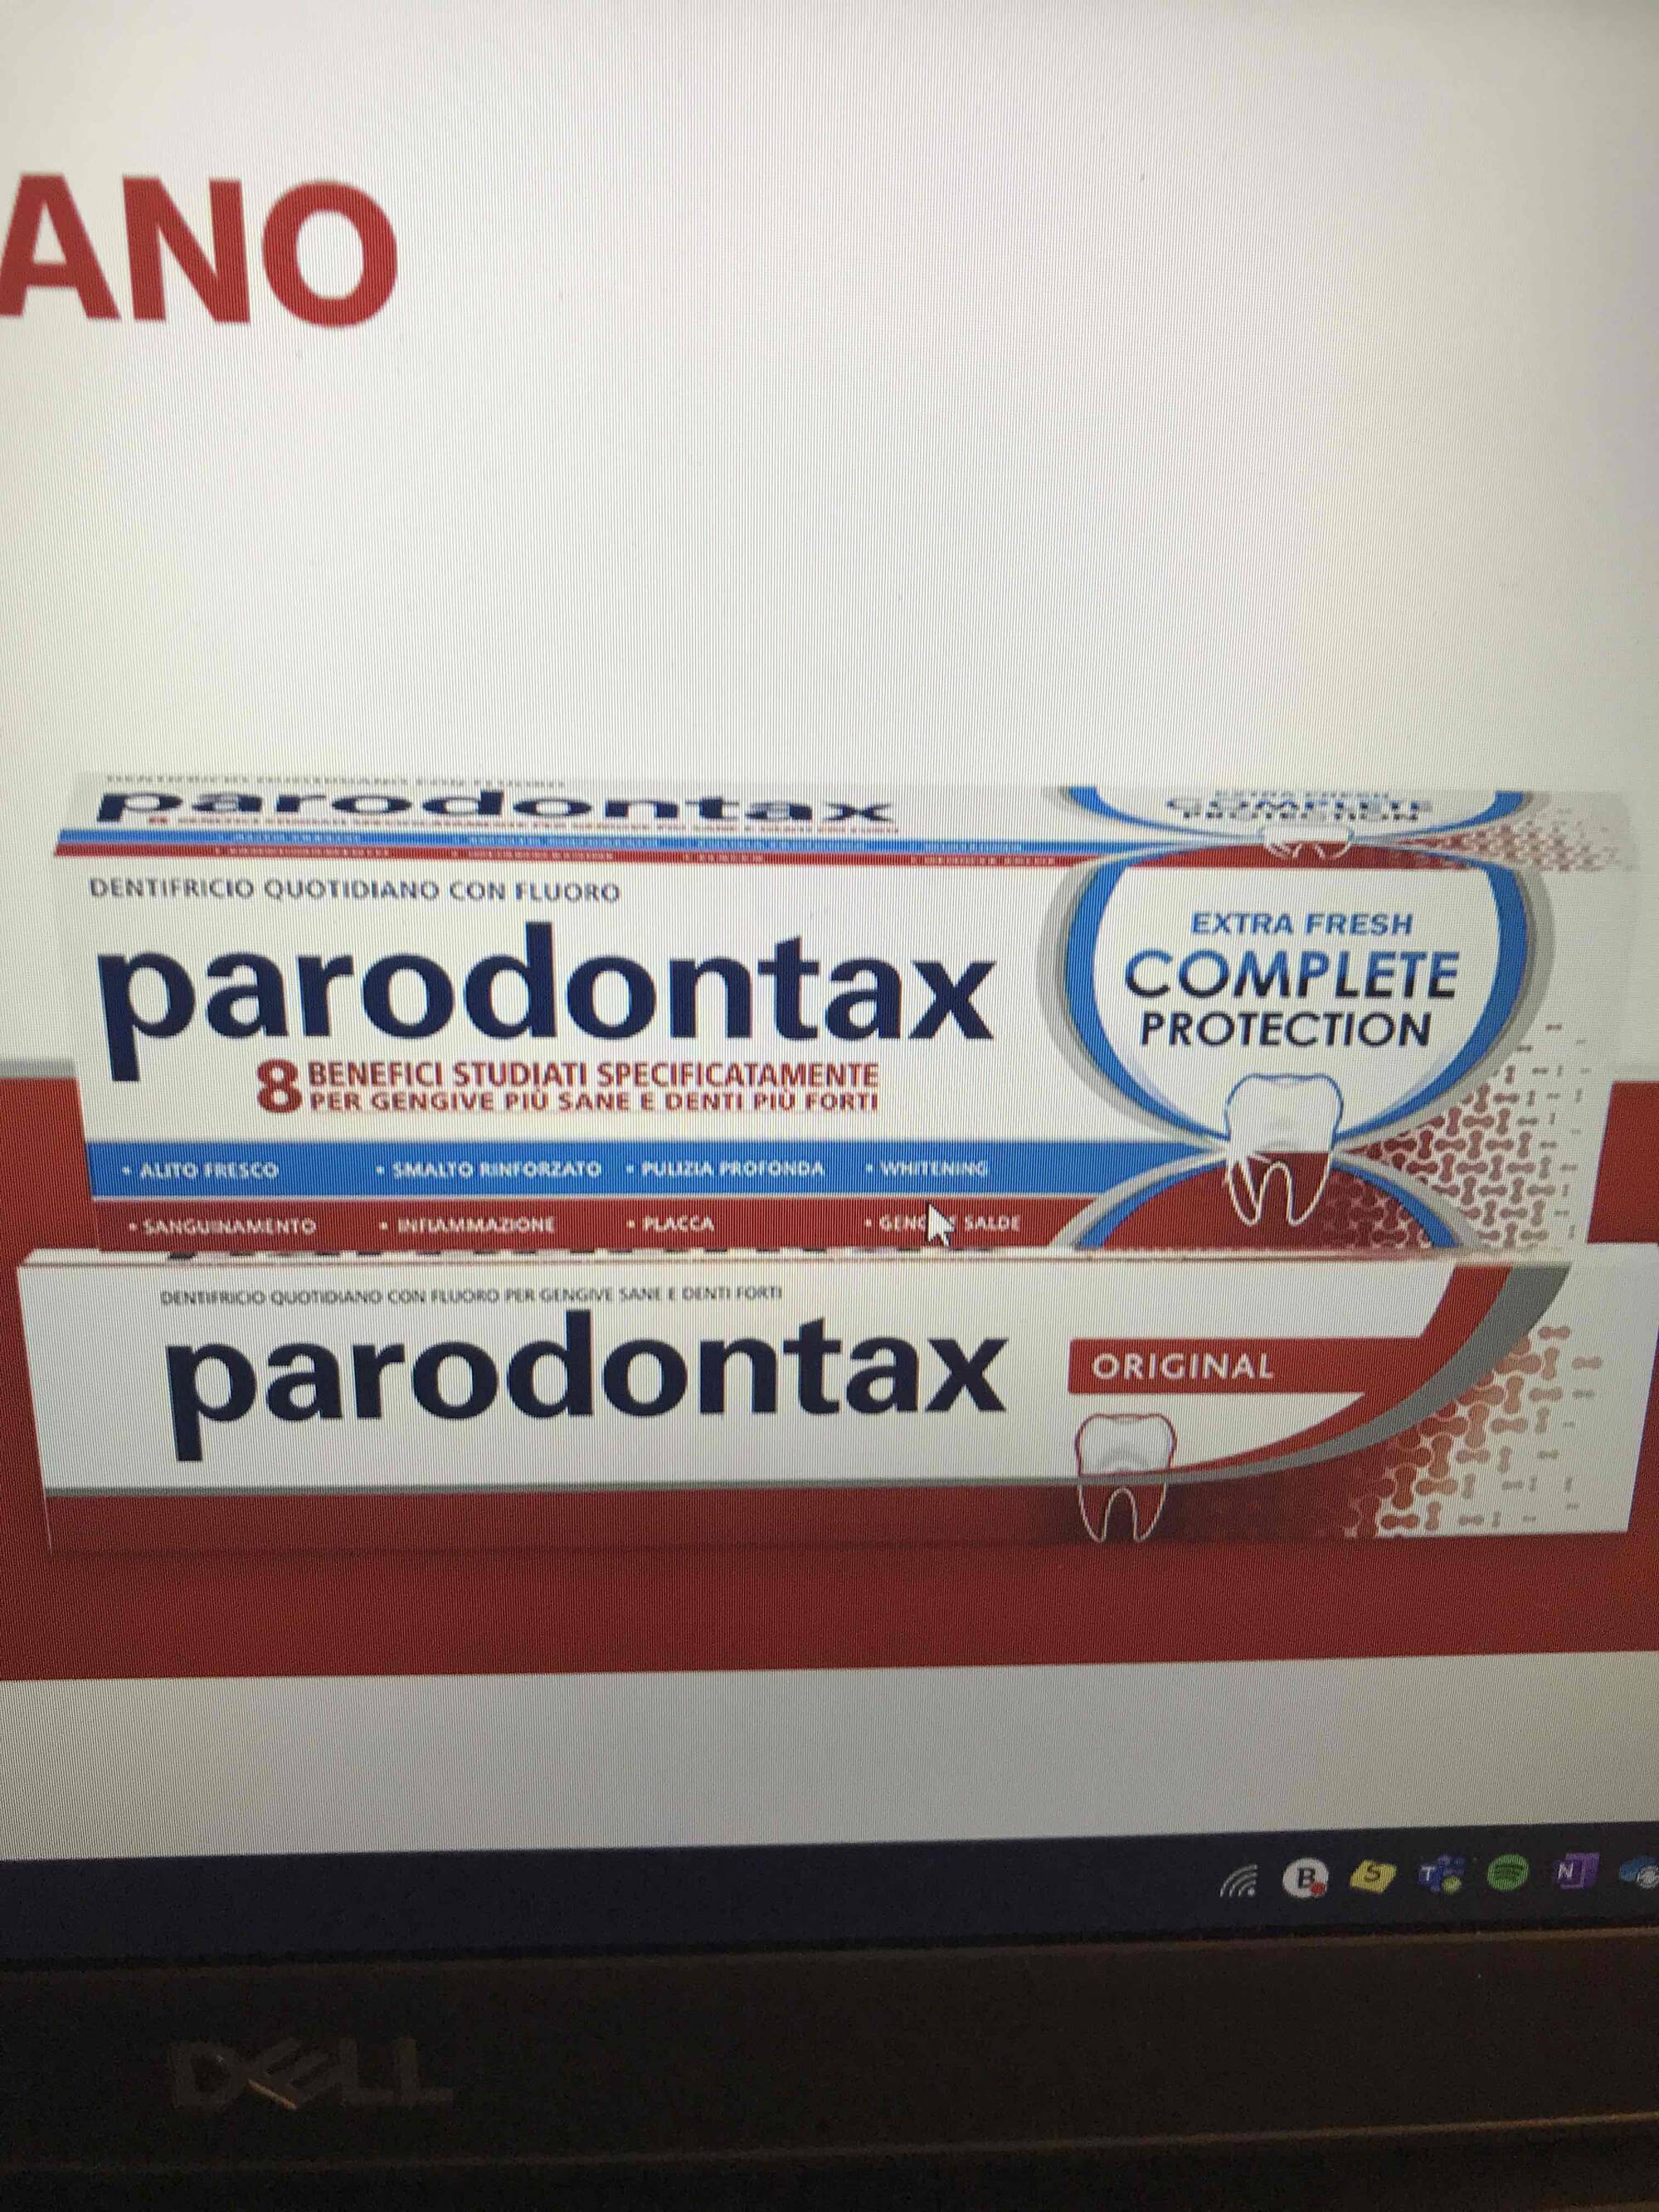 PARODONTAX - Original